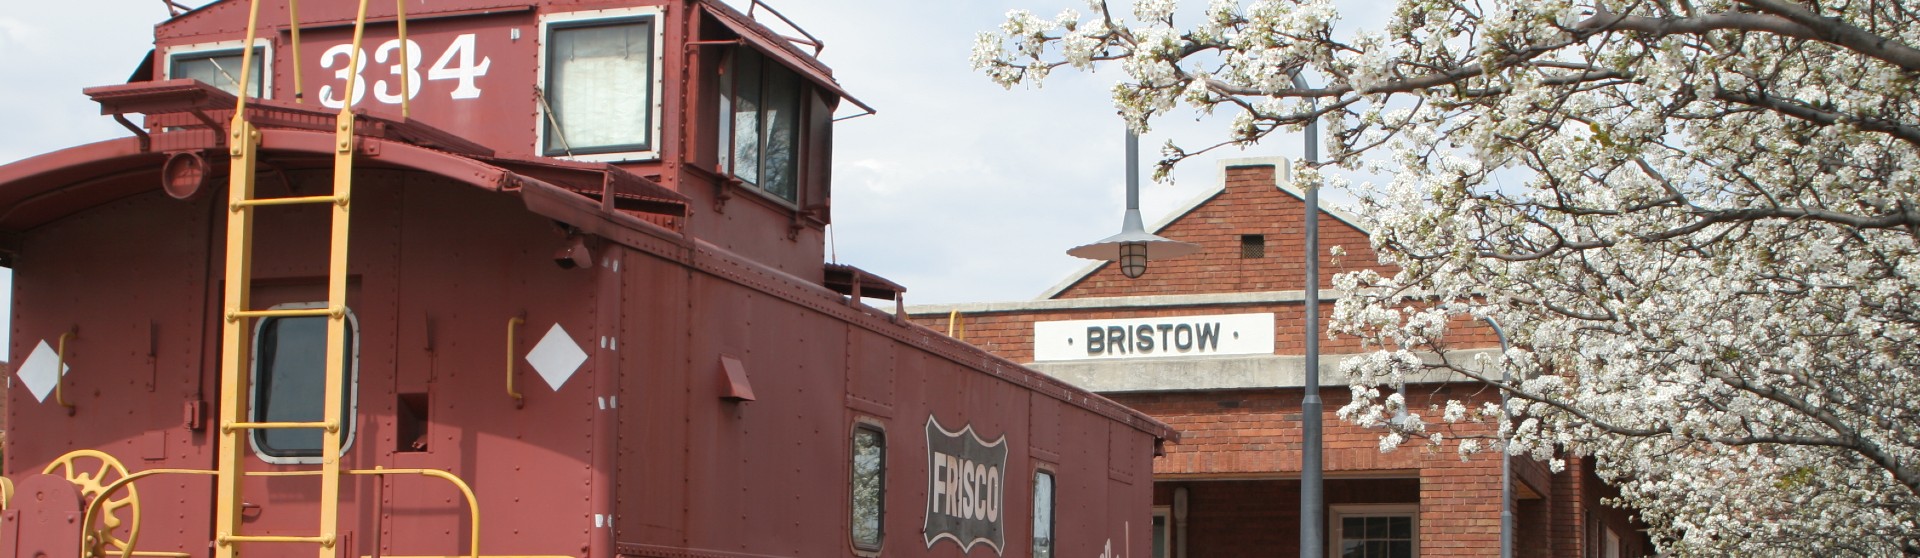 Old train depot in Bristow, OK.